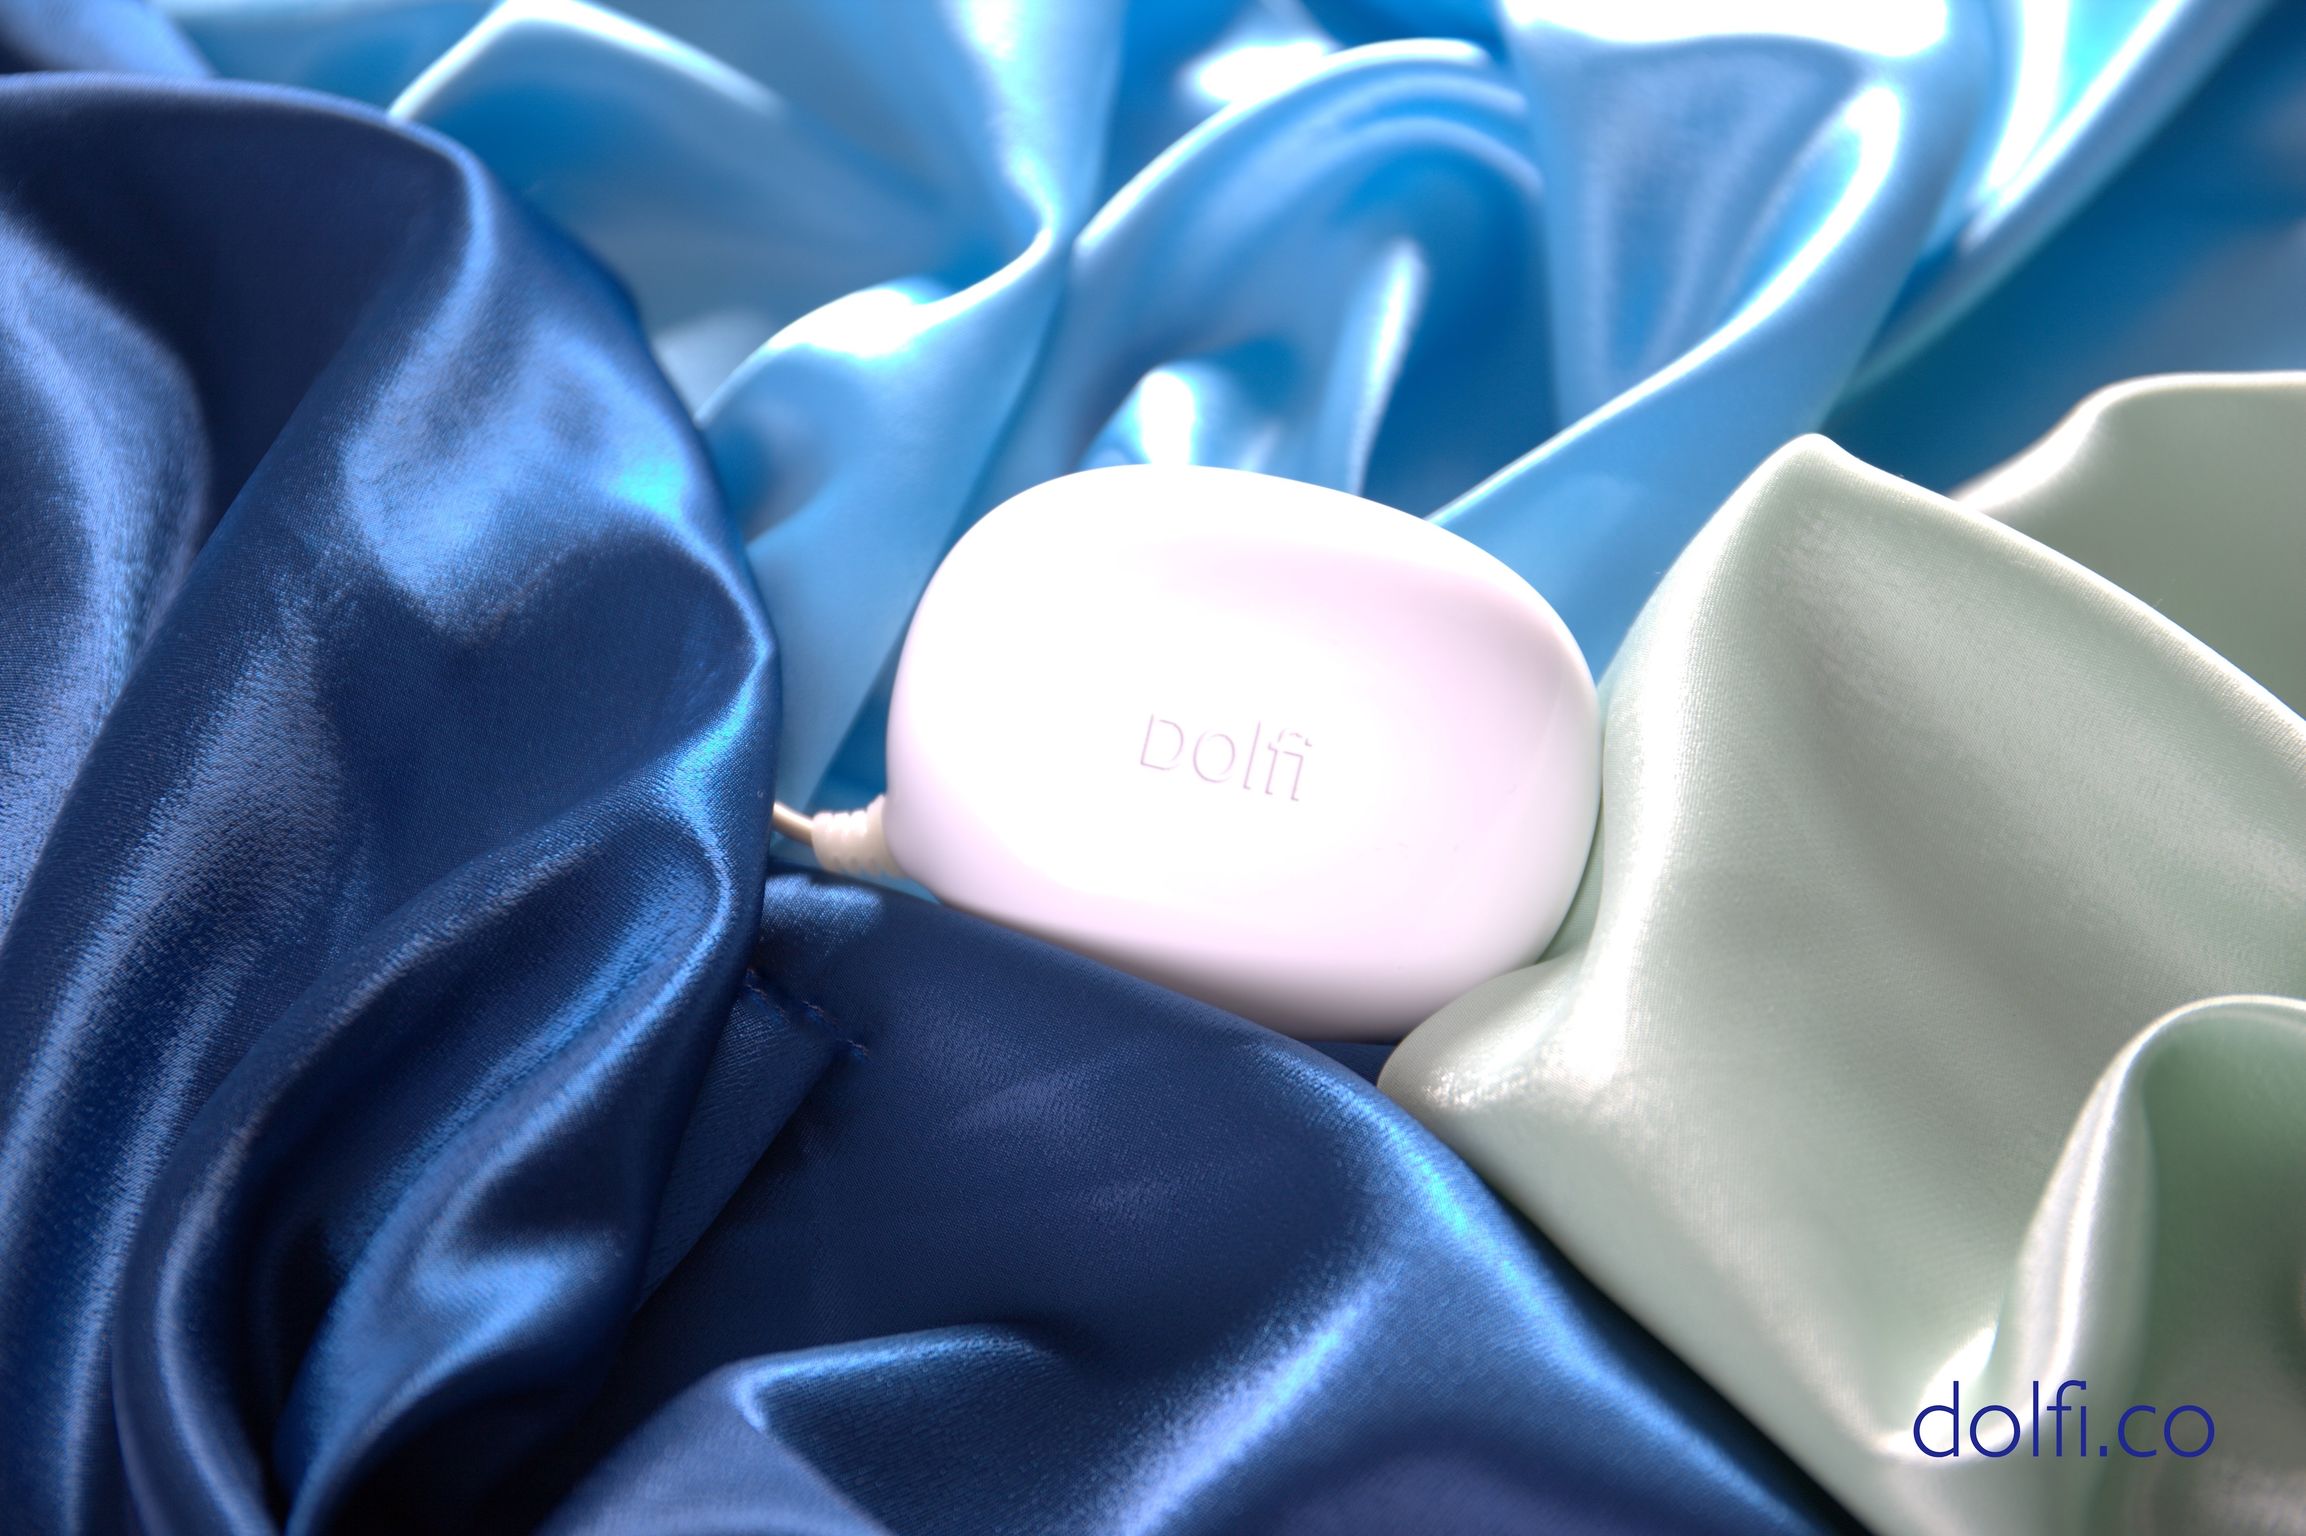 Dolfi: The Next Gen Washing Device